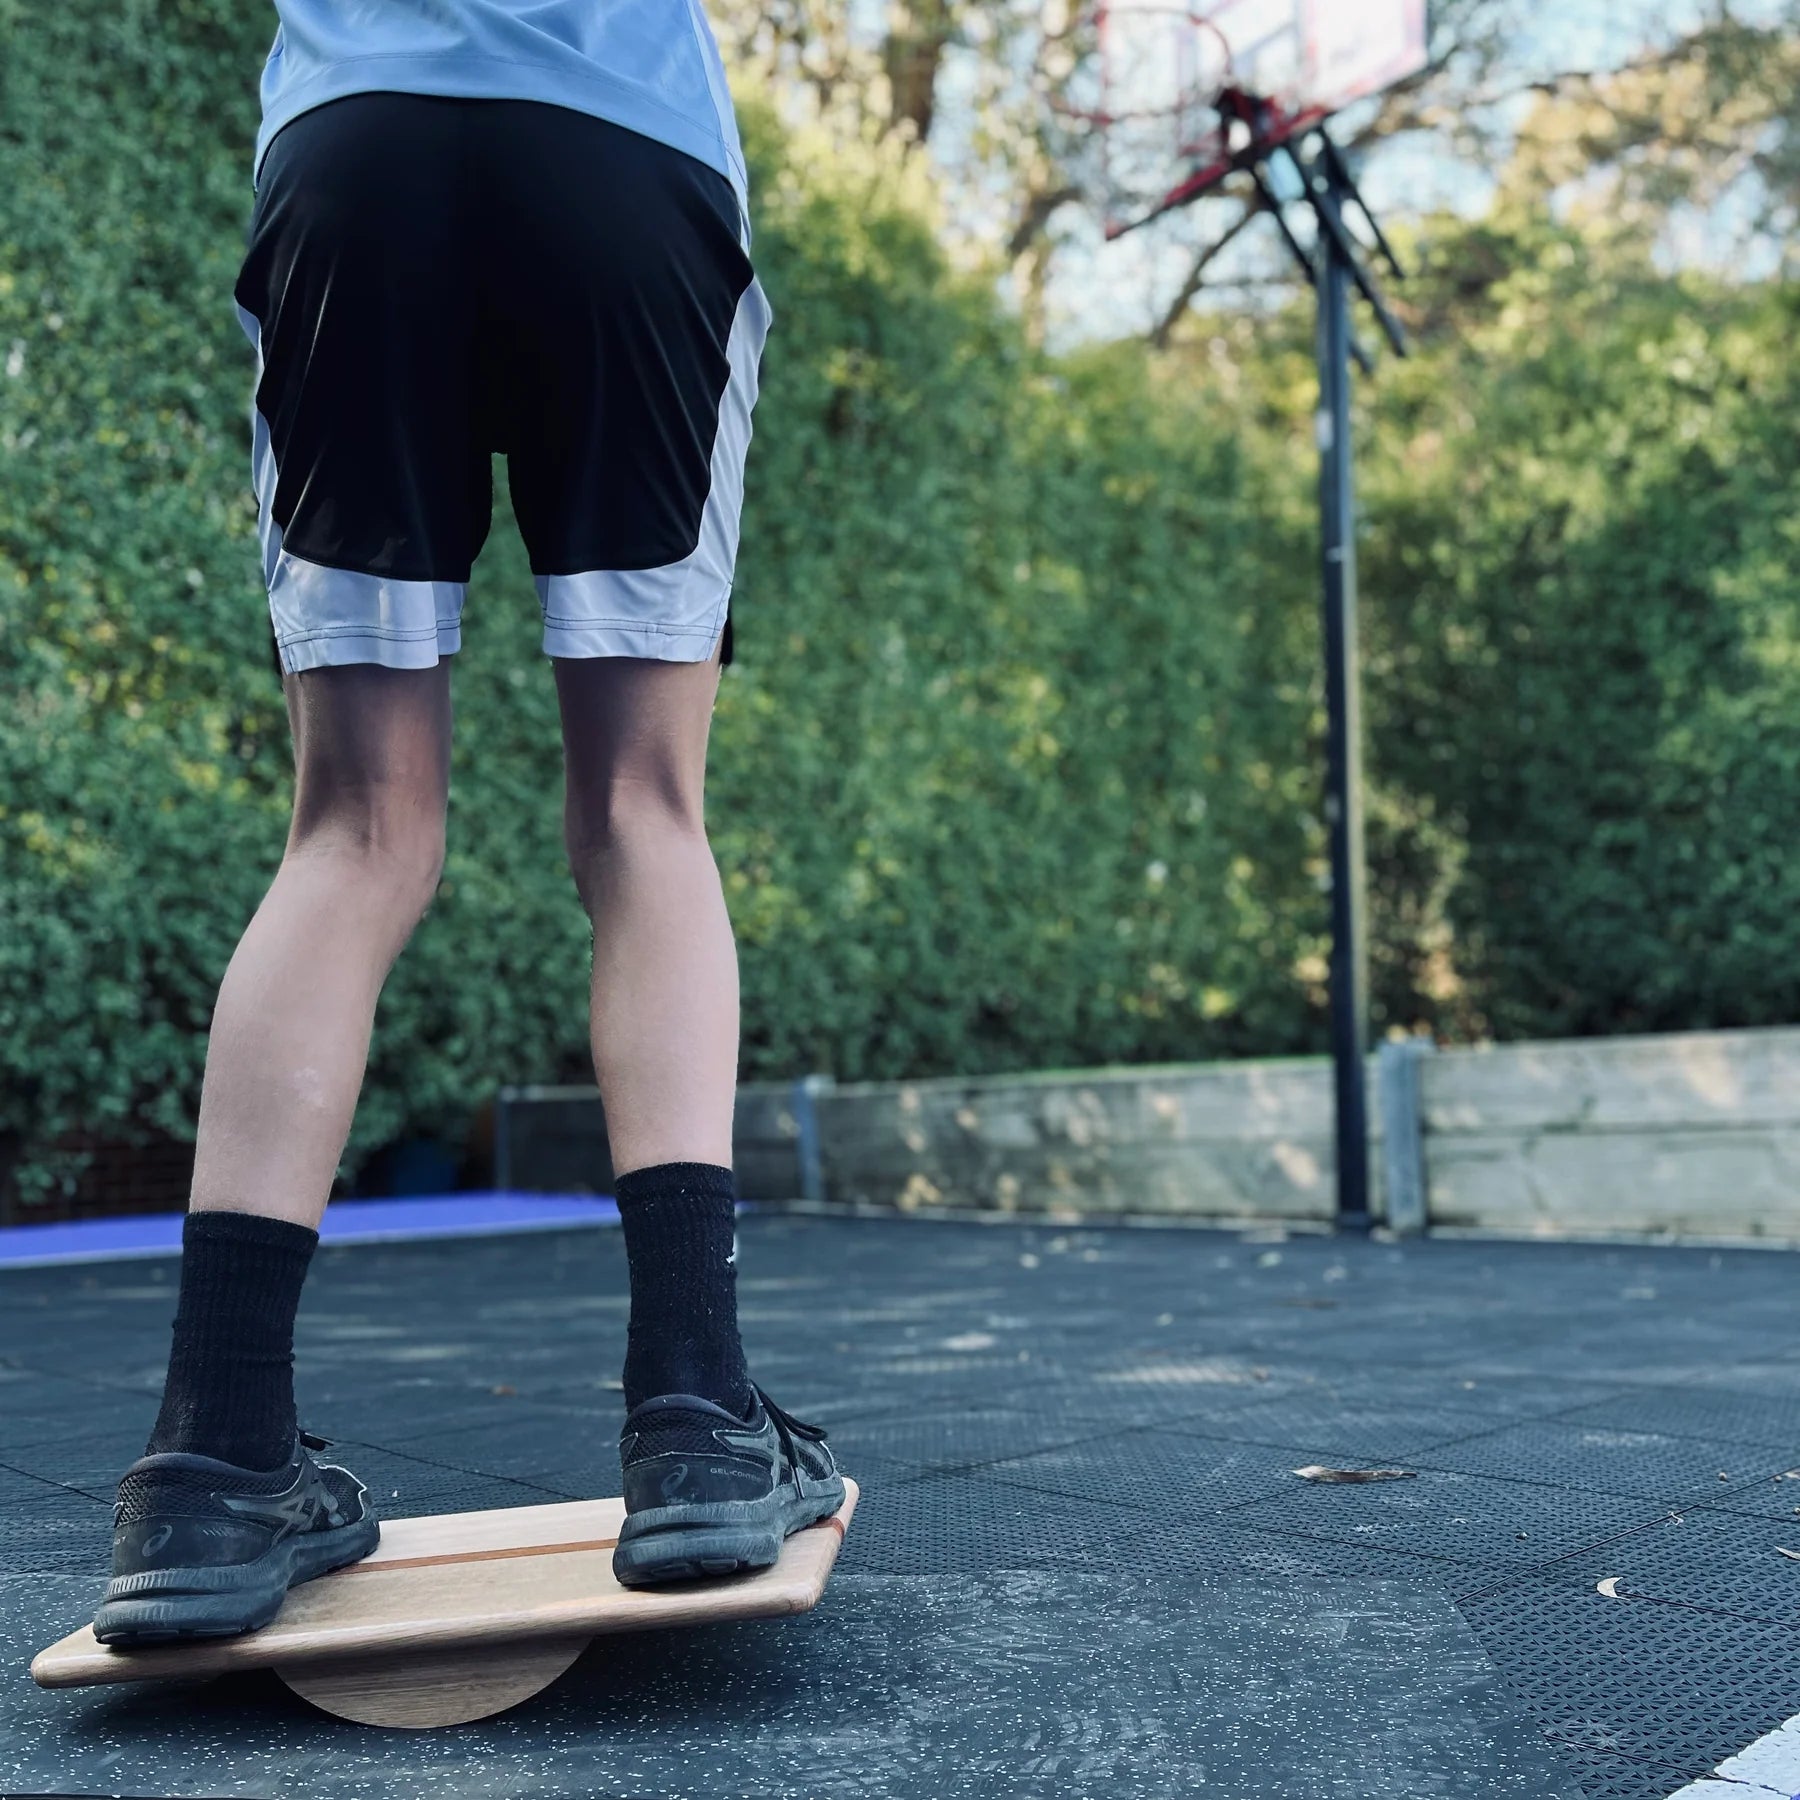 Boy balancing on Regular wobble board